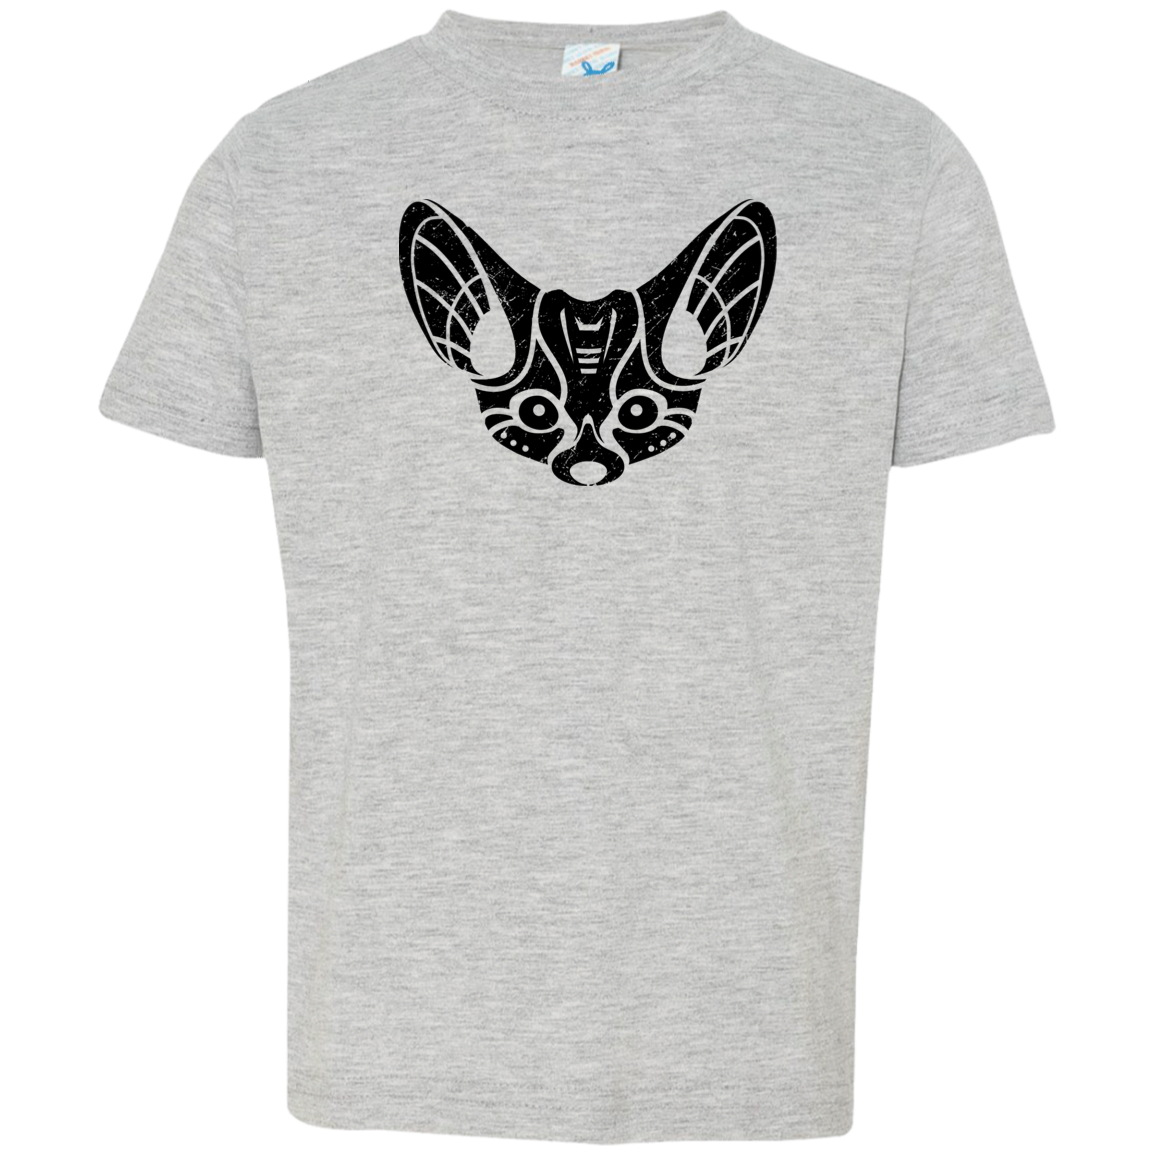 Black Distressed Emblem T-Shirt for Toddlers (Fennec Fox/Fen) - Dark Corps